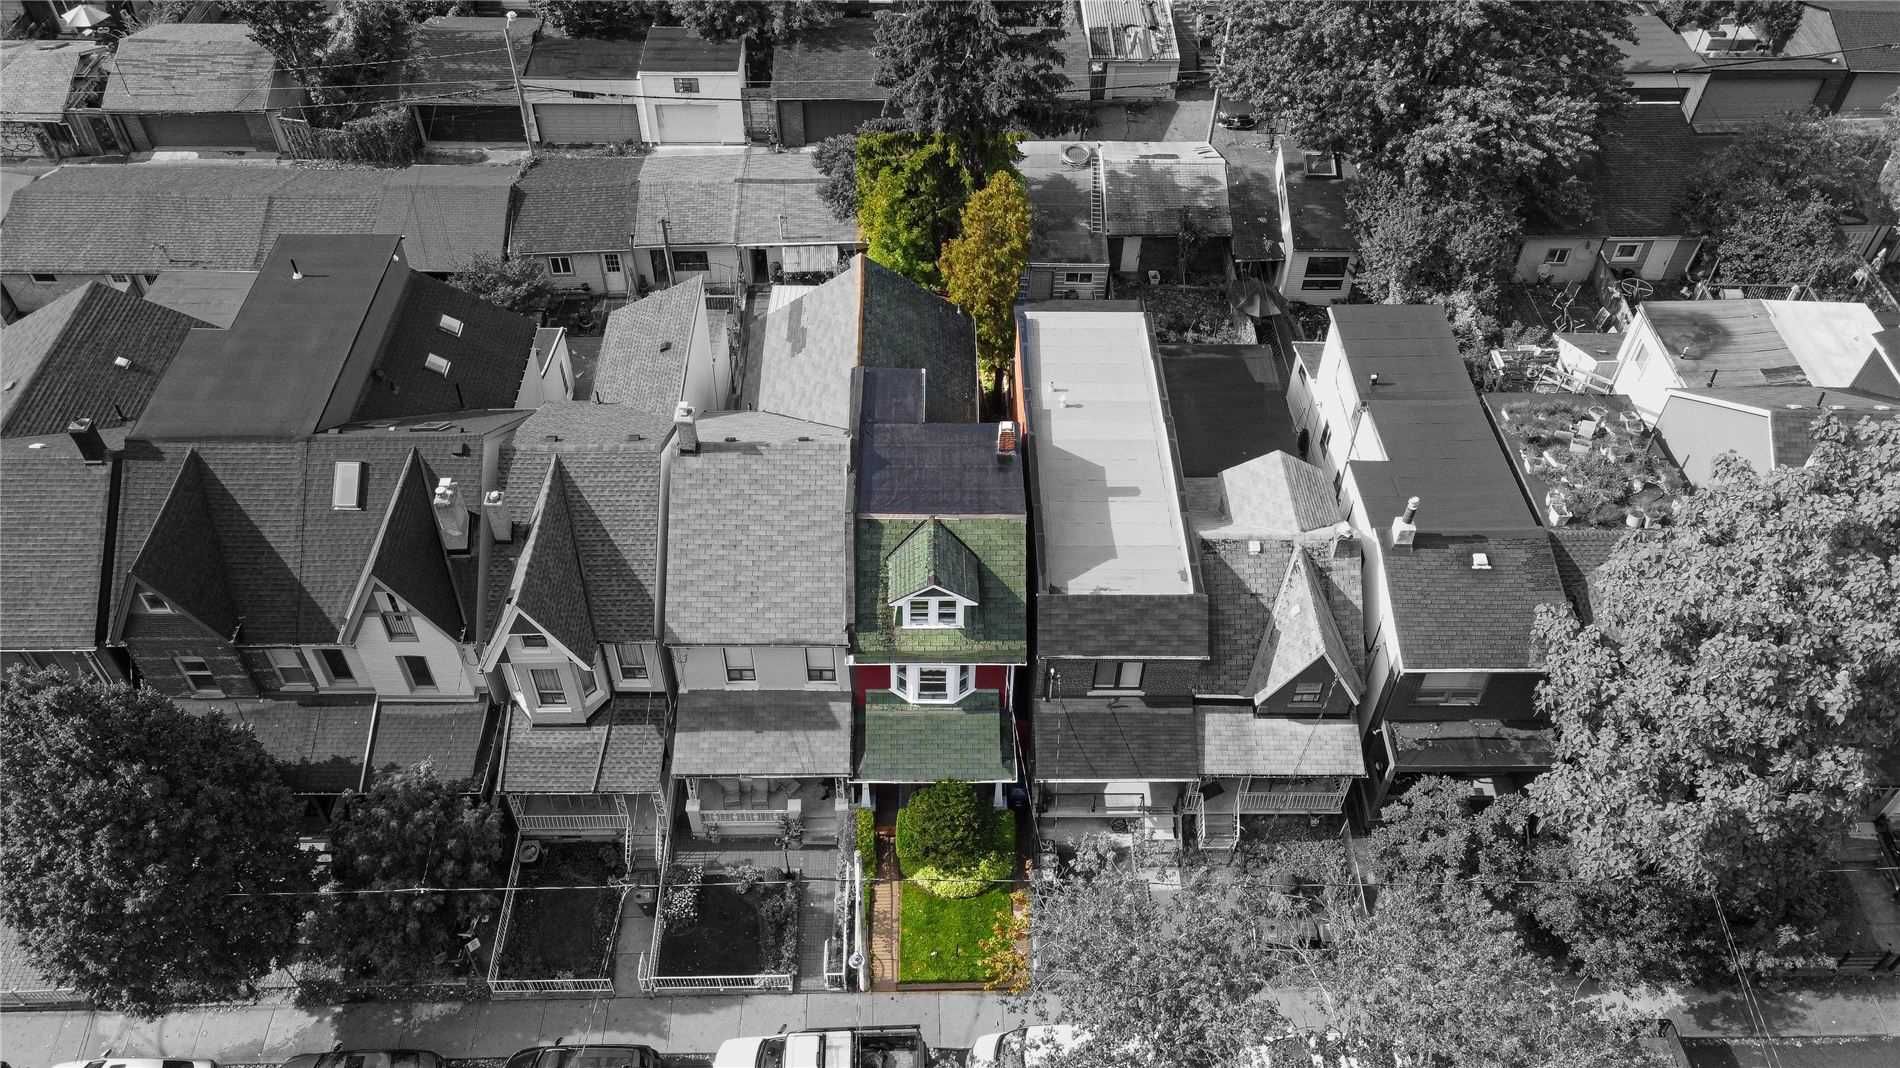 Main Photo: 54 Montrose Avenue in Toronto: Palmerston-Little Italy House (2 1/2 Storey) for sale (Toronto C01)  : MLS®# C5412510